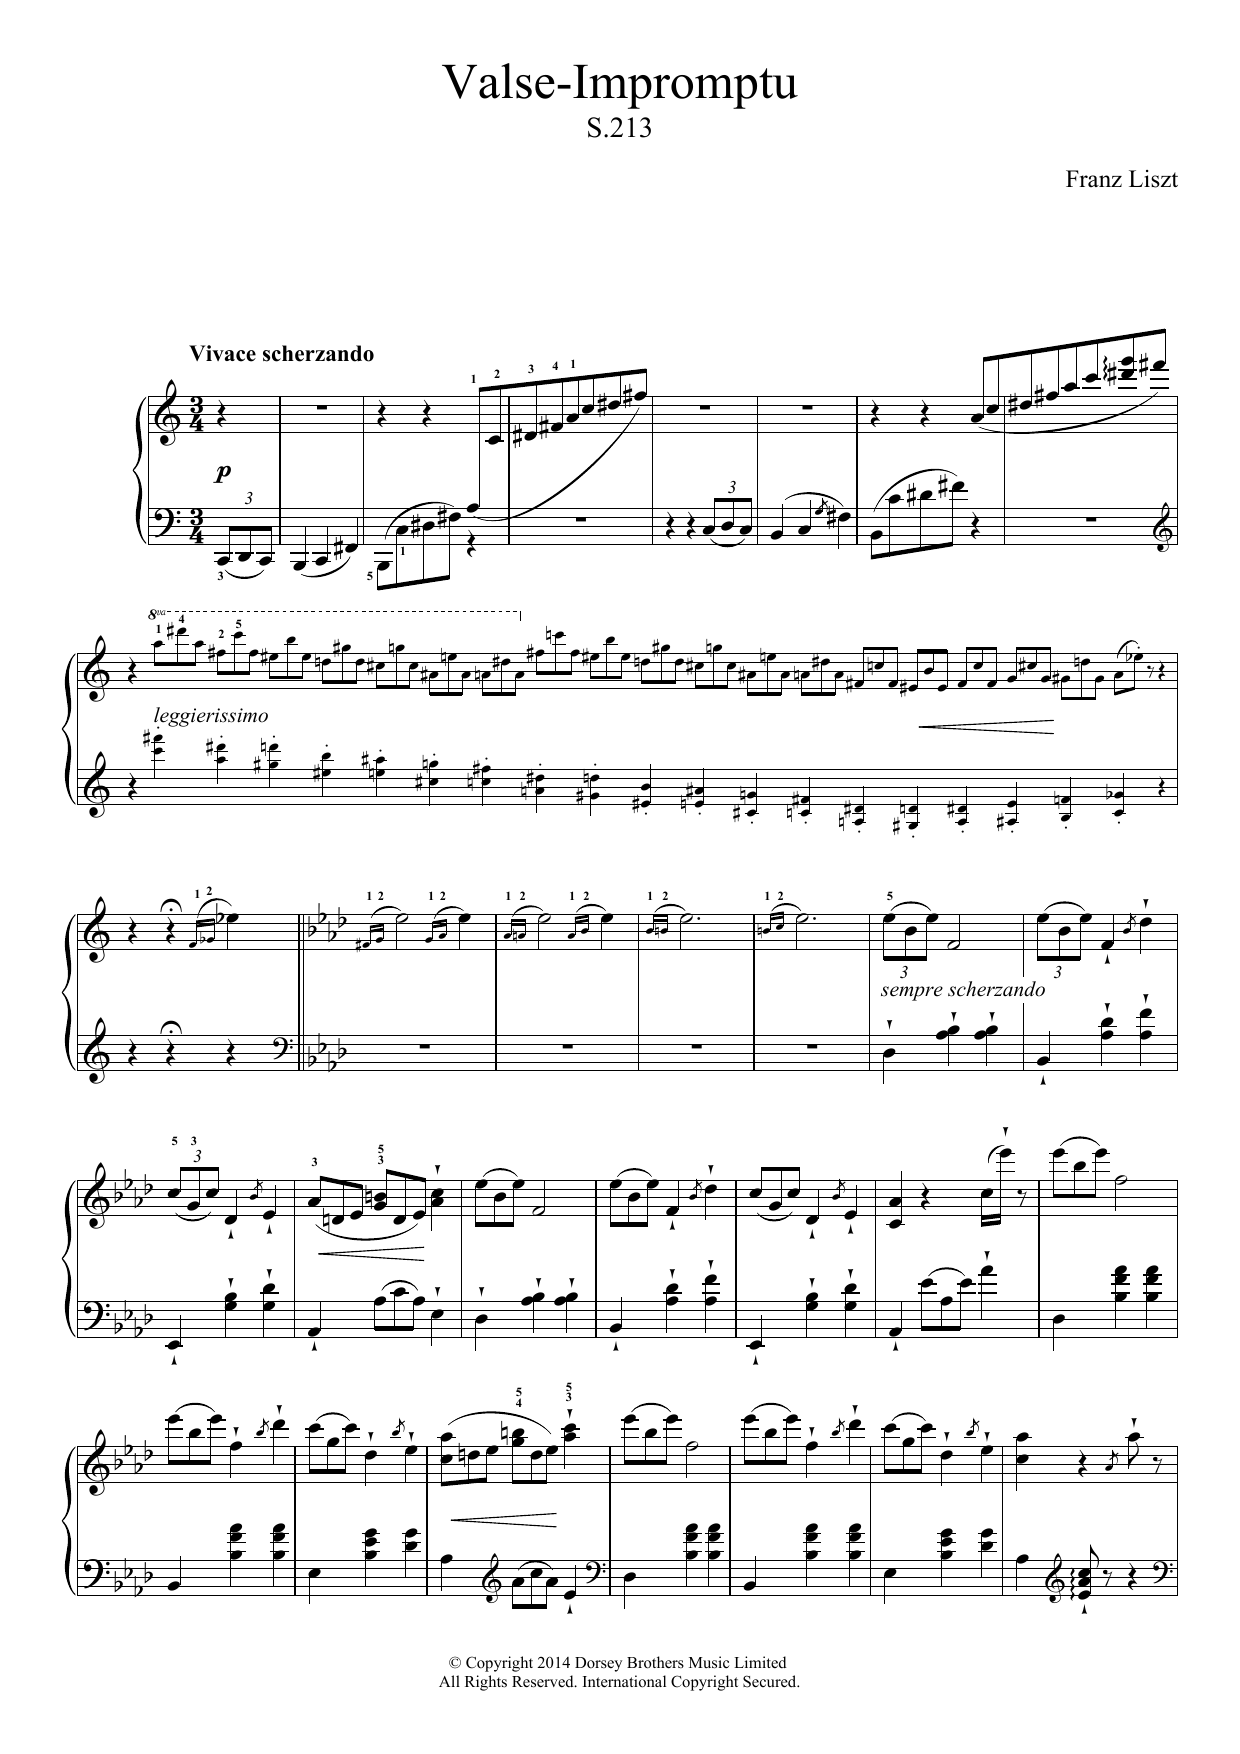 Franz Liszt Valse-Impromptu Sheet Music Notes & Chords for Piano - Download or Print PDF